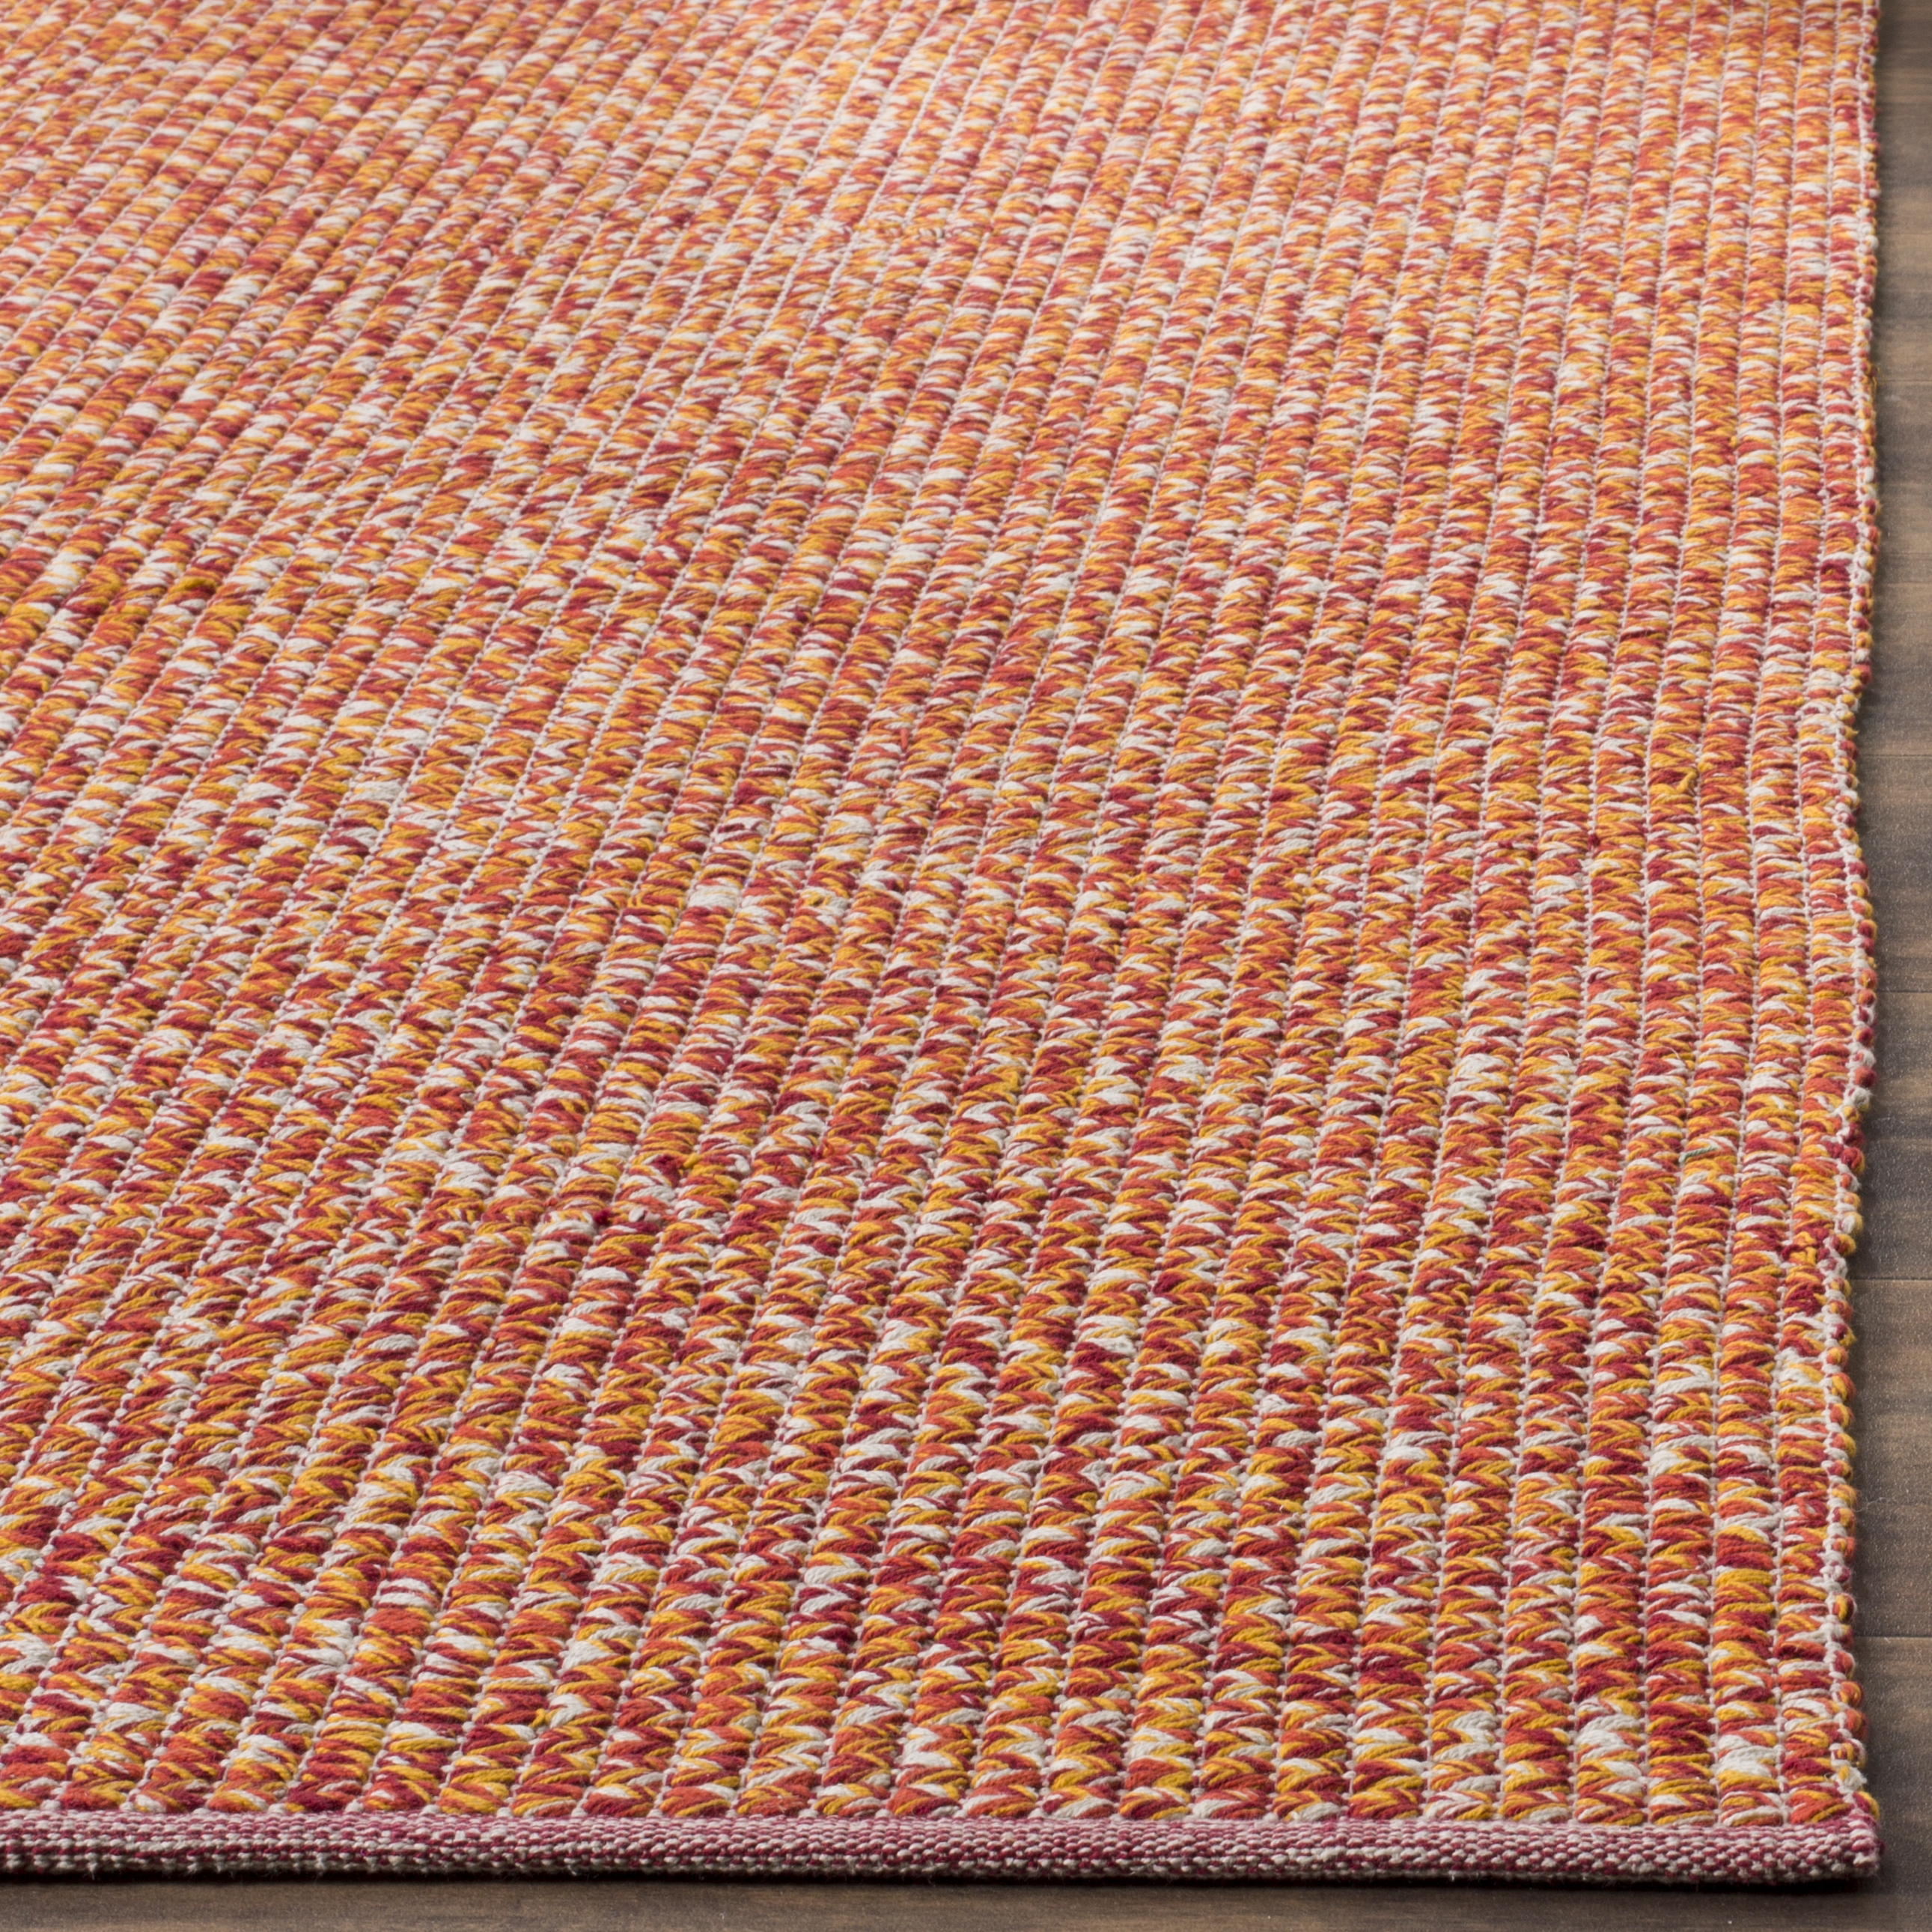 Arlo Home Hand Woven Area Rug, MTK602D, Orange/Multi,  3' X 5' - Image 1